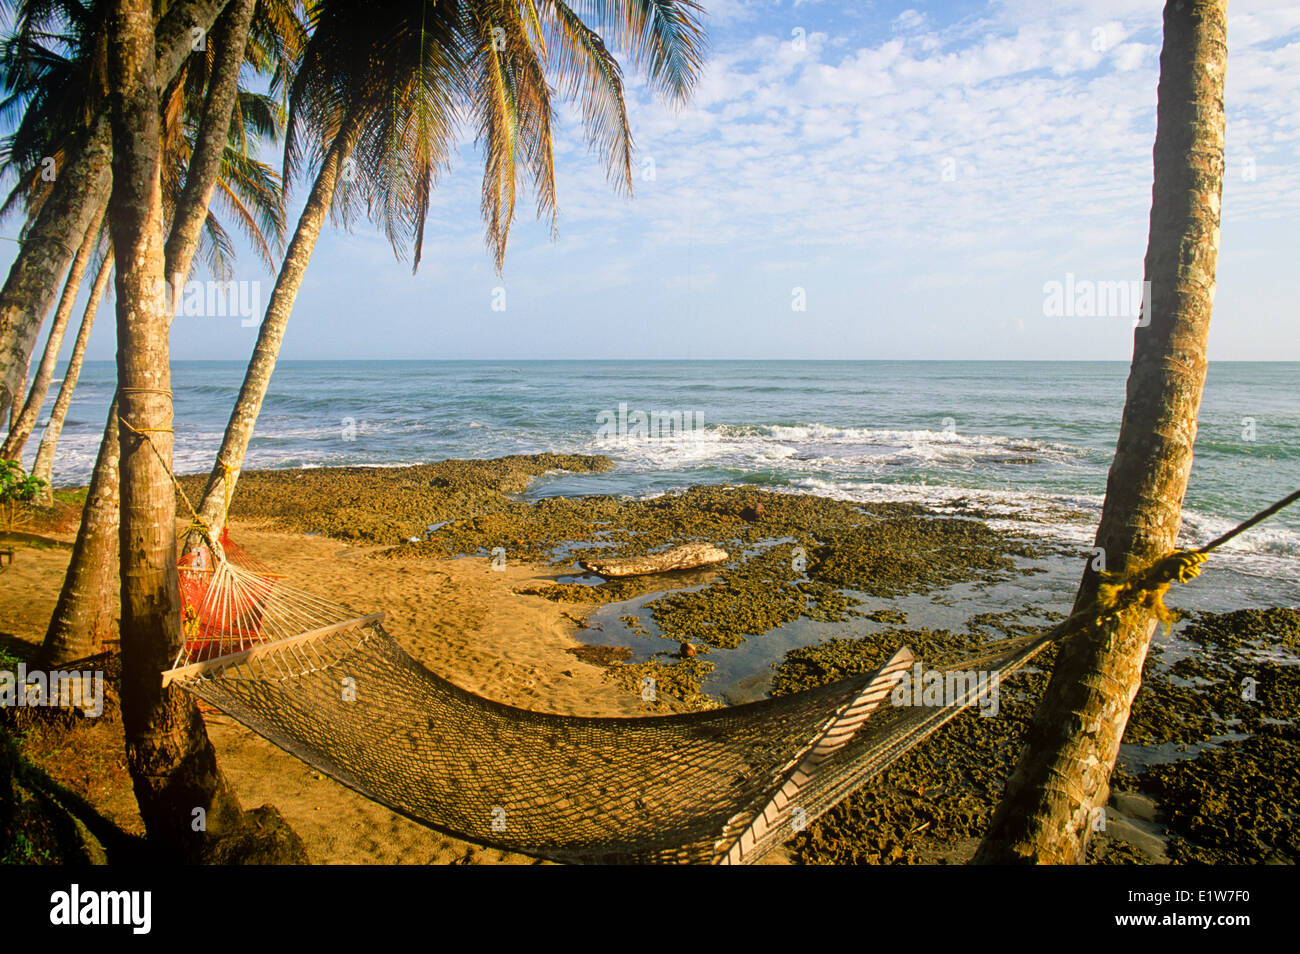 Hammock on coastline, Cahuita, Costa Rica Stock Photo